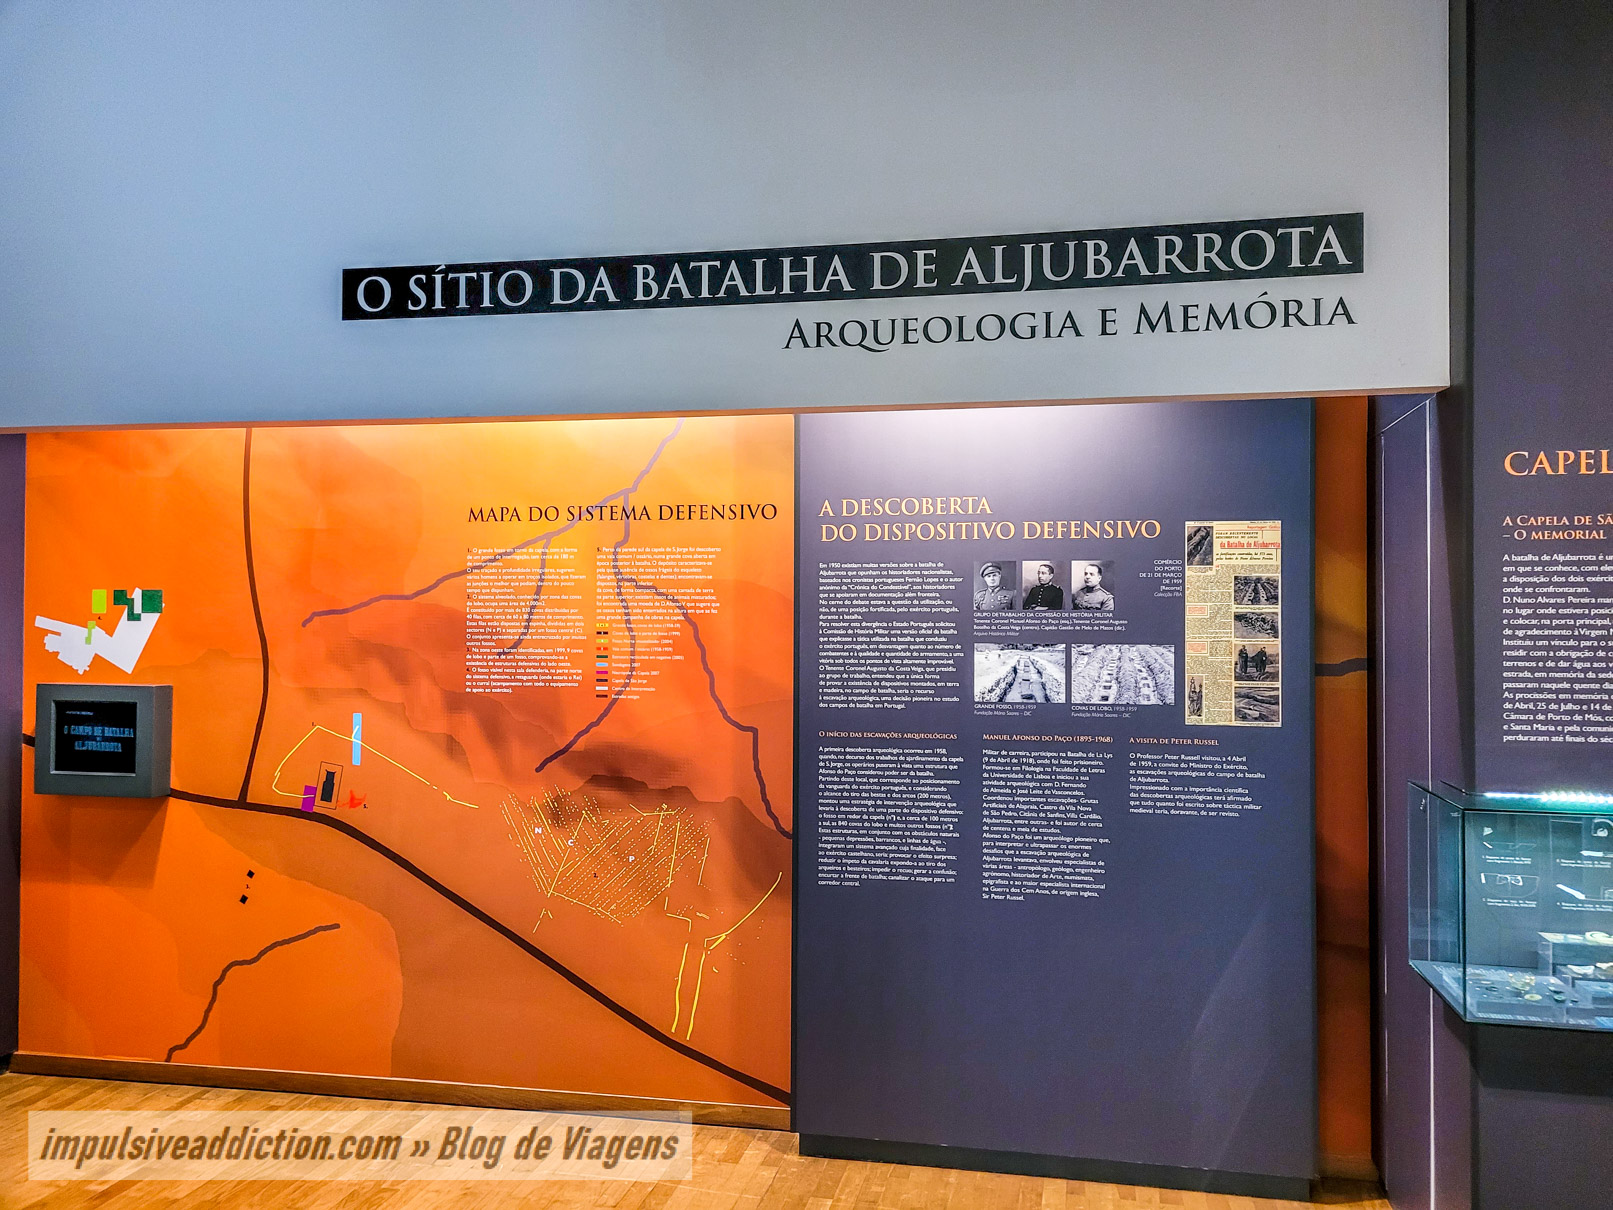 Interpretive Center of the Battle of Aljubarrota